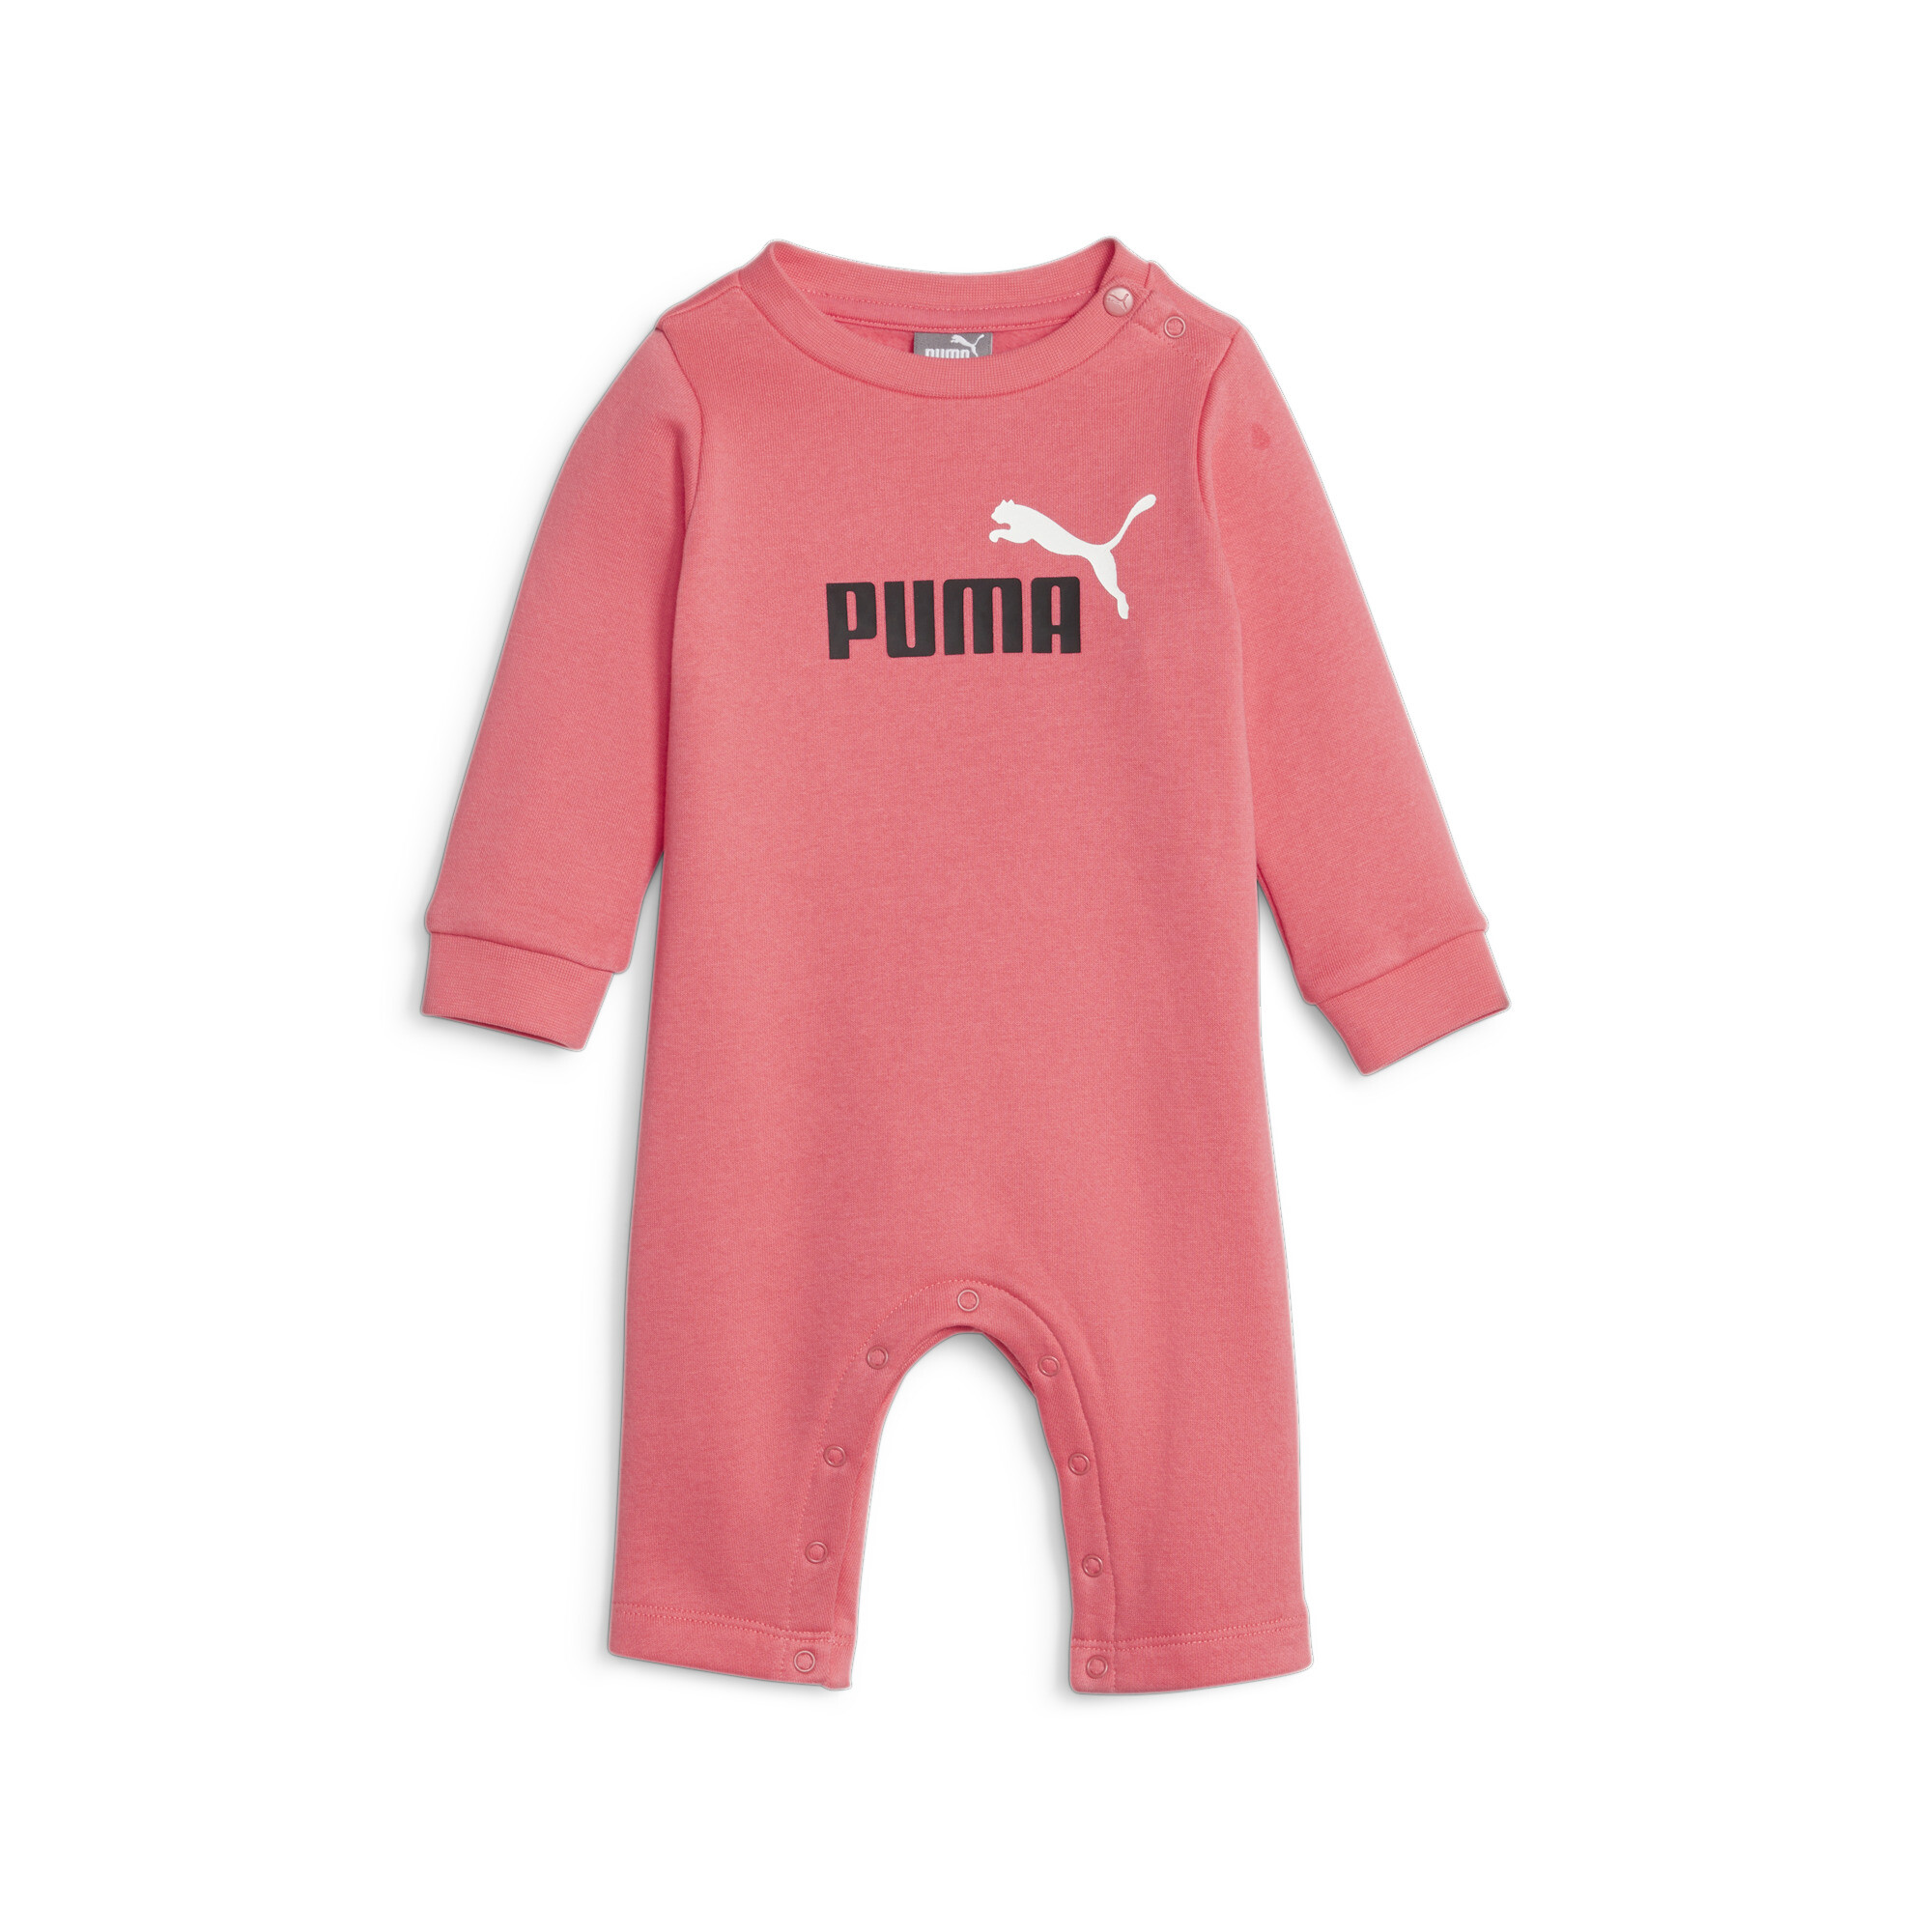 Puma Minicats Newborn Coverall Babies, Pink, Size 1-2M, Clothing